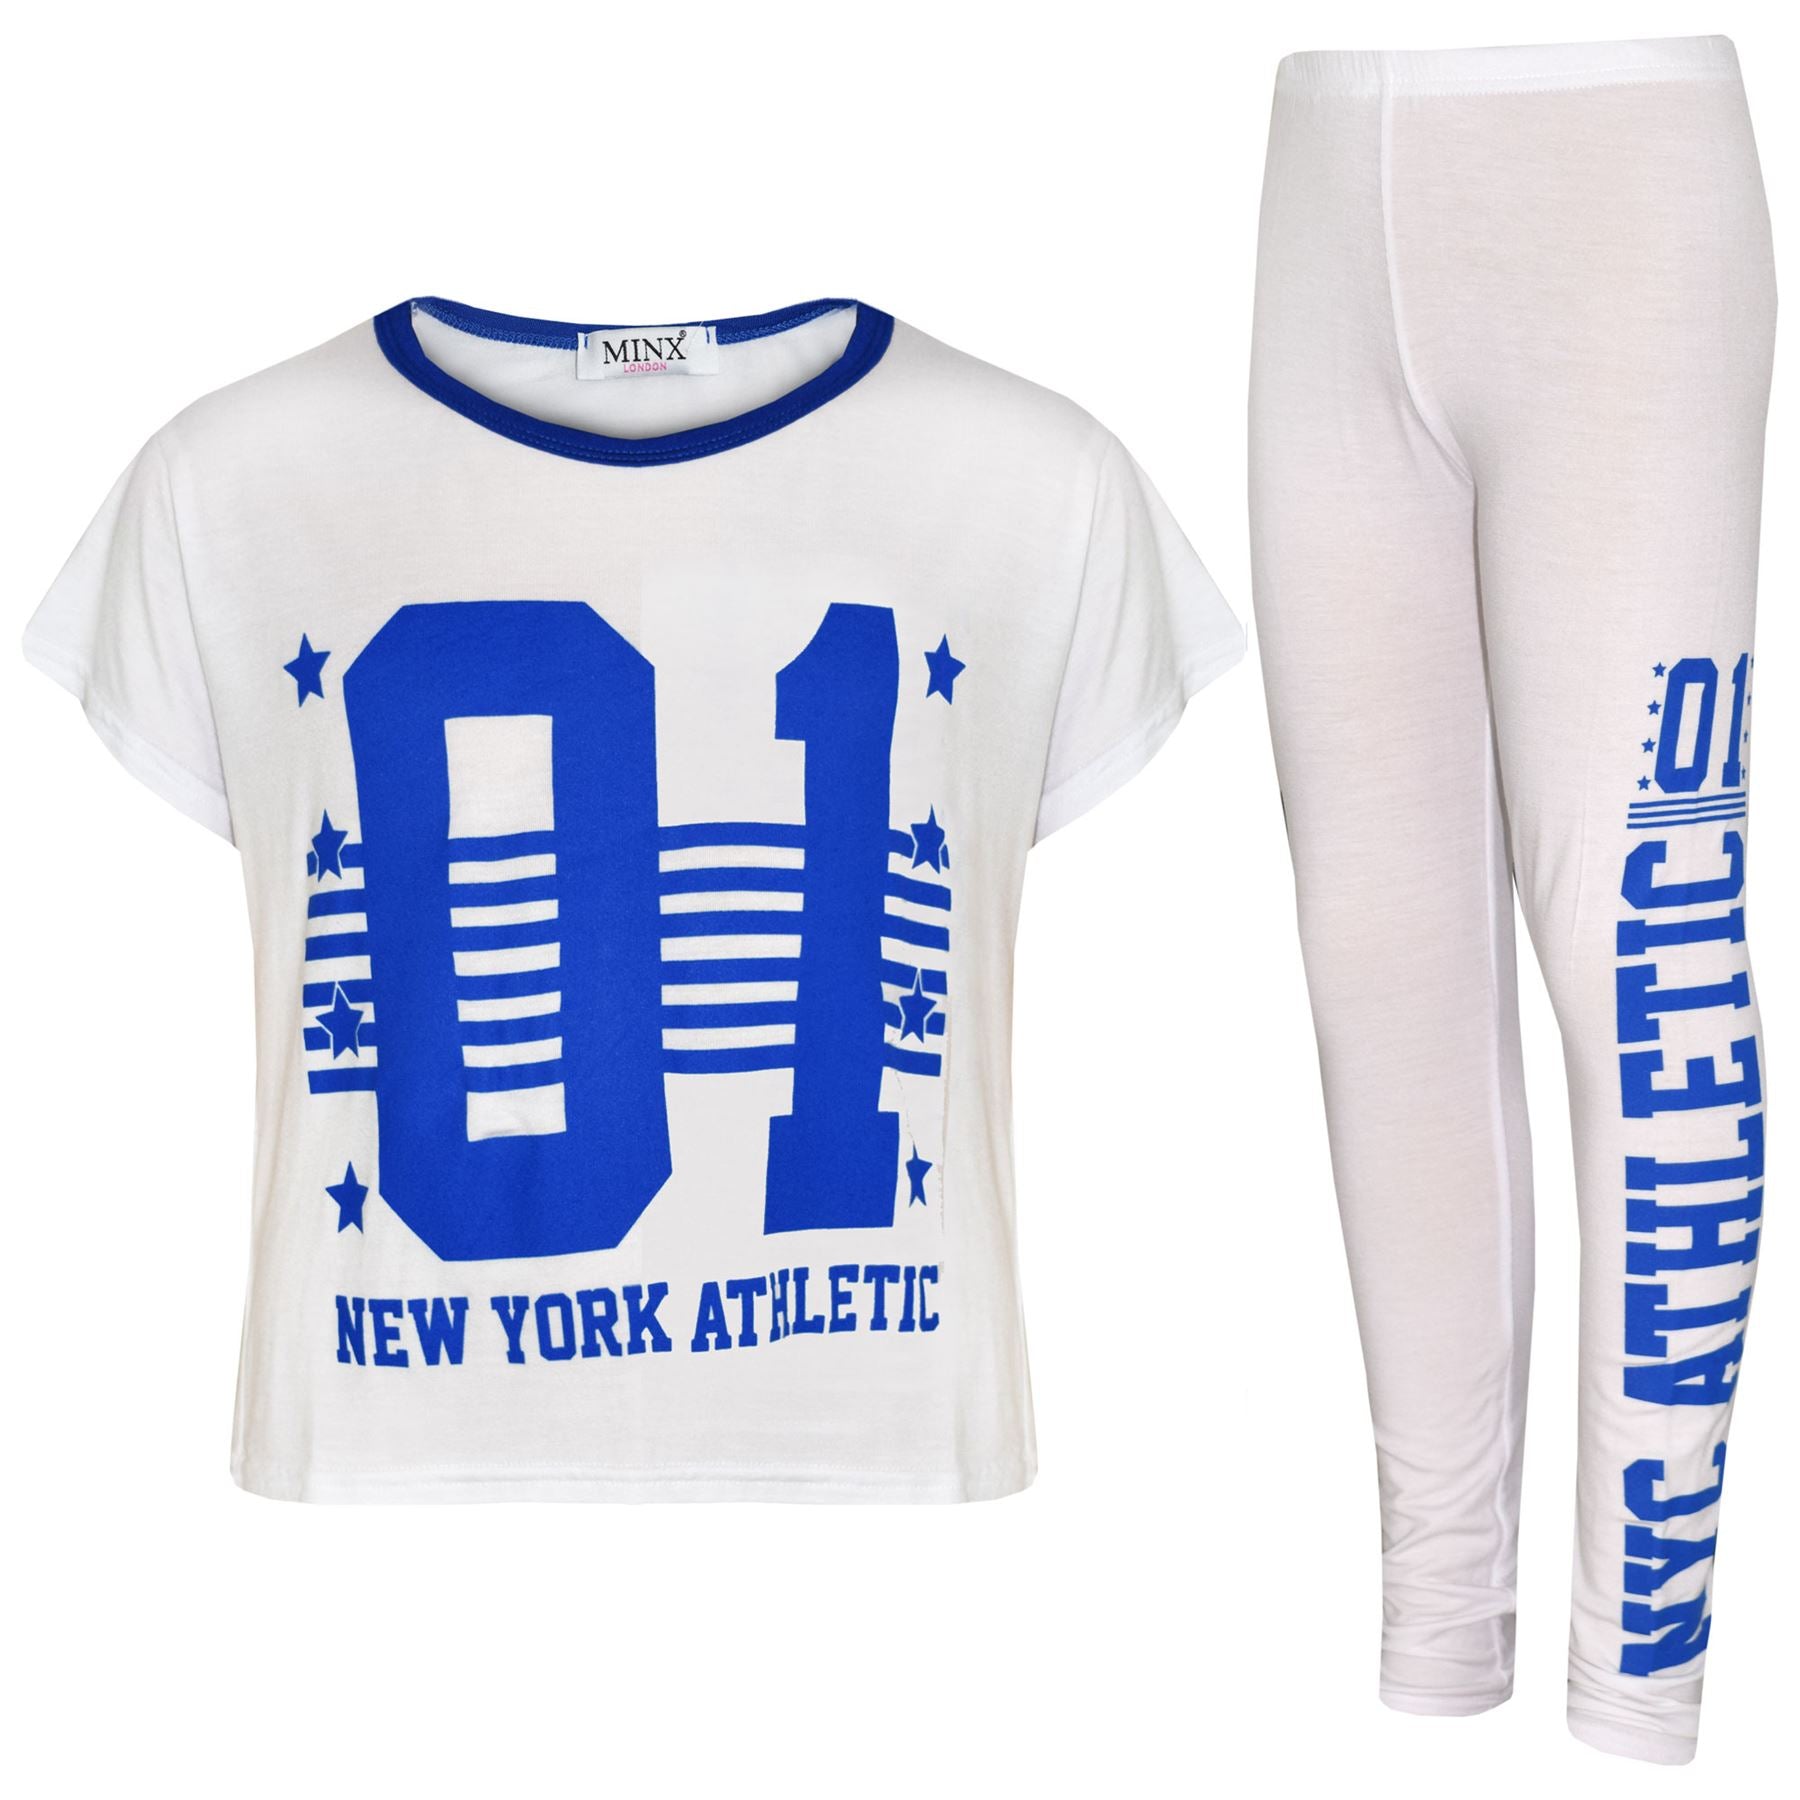 Kids Girls 01 New York Athletic Print Stylish Crop Top & Legging Set 7-13 Years